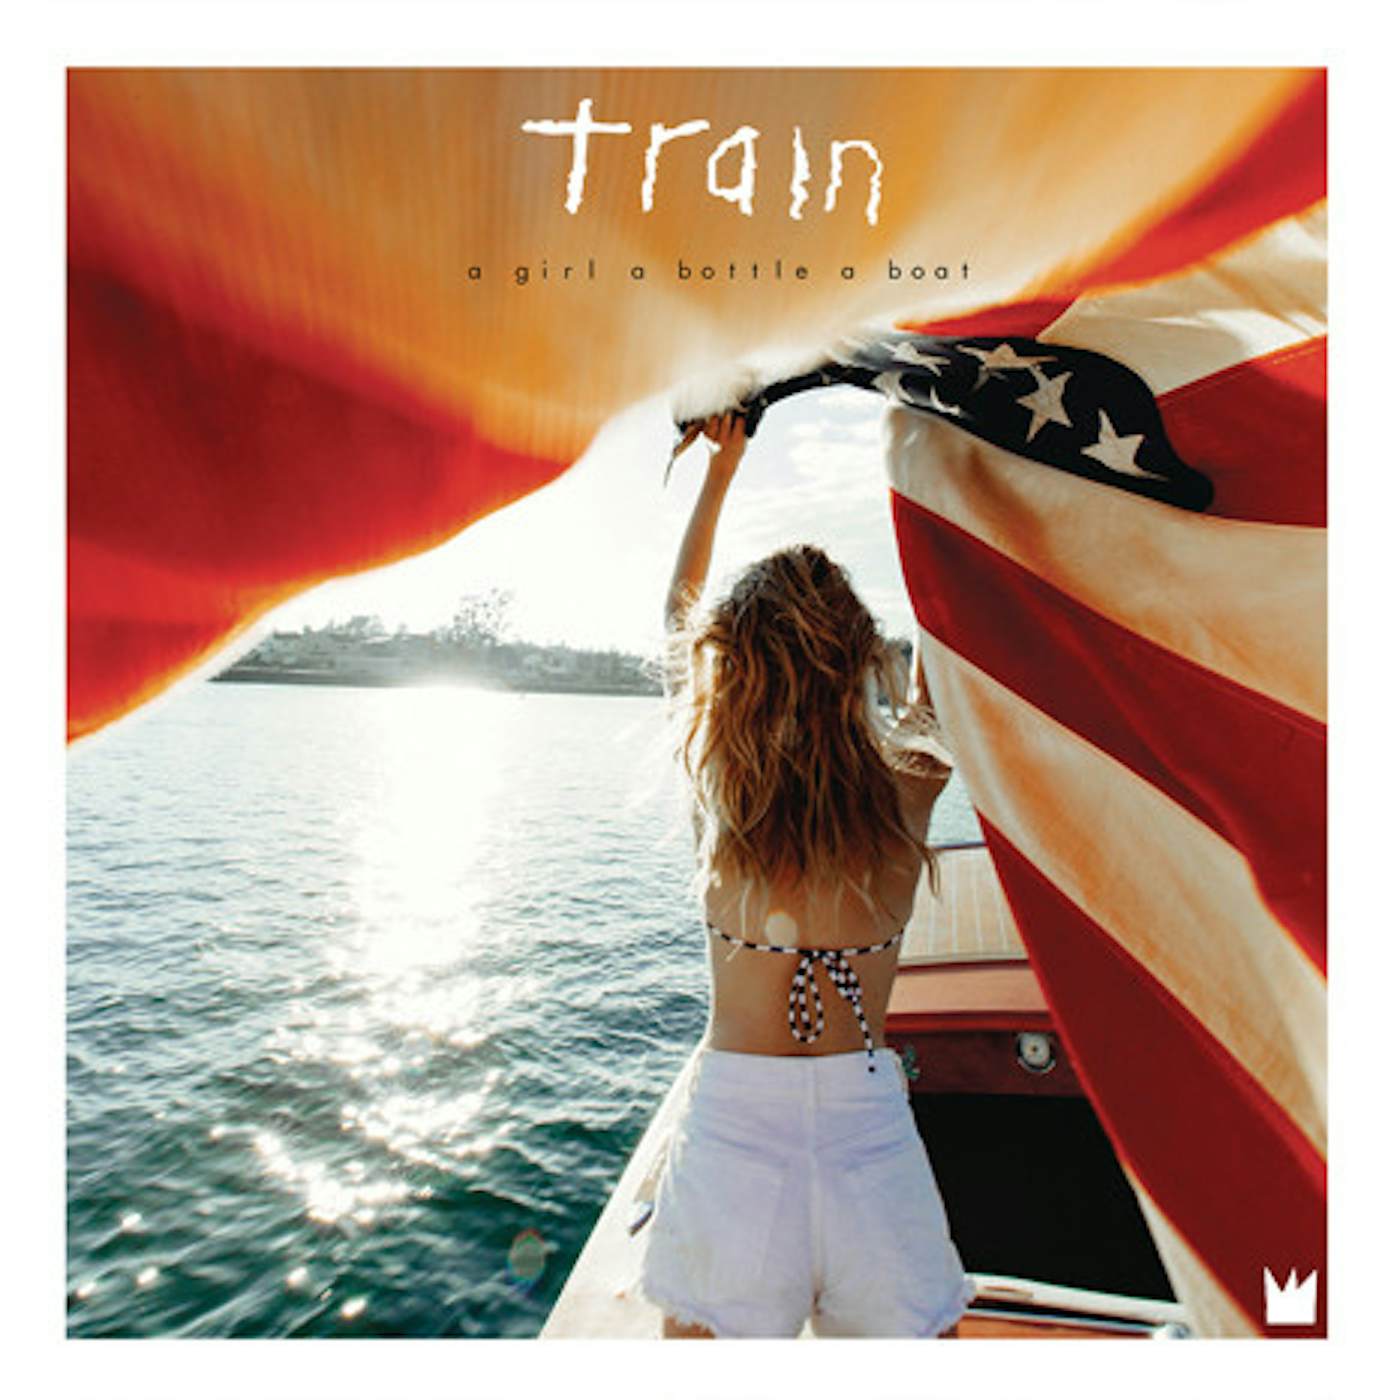 Train GIRL A BOTTLE A BOAT Vinyl Record